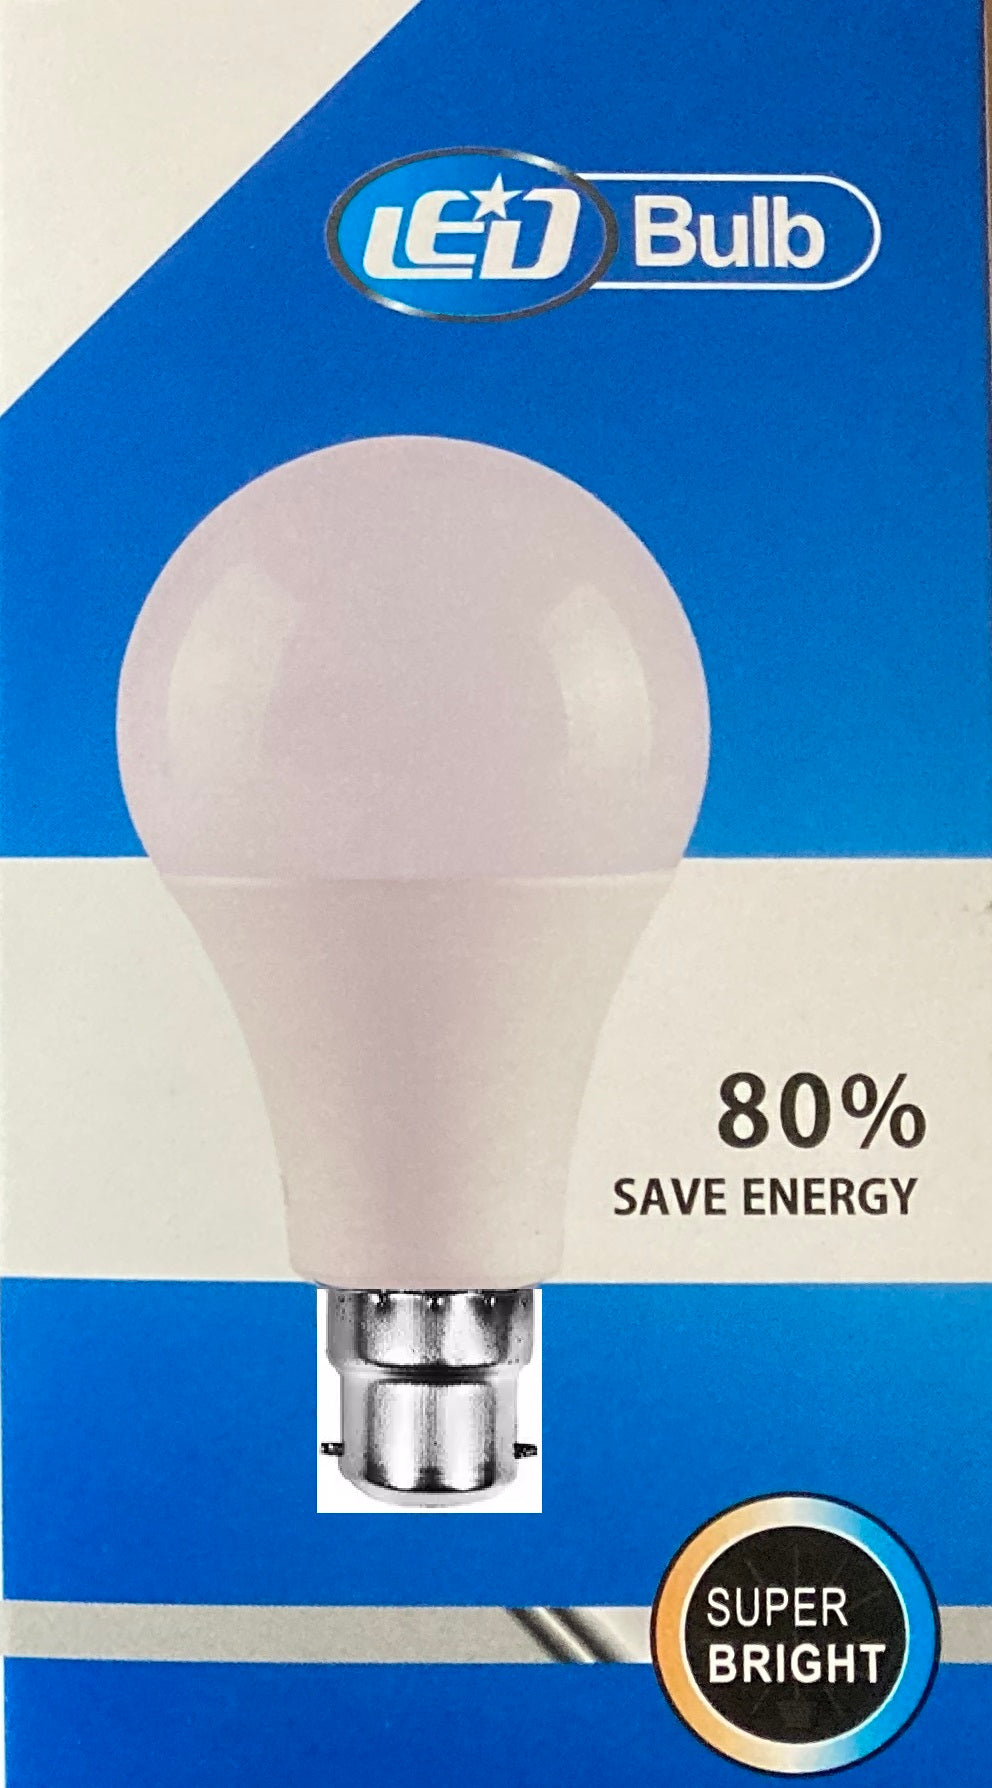 15W B22 LED Light Bulb box example